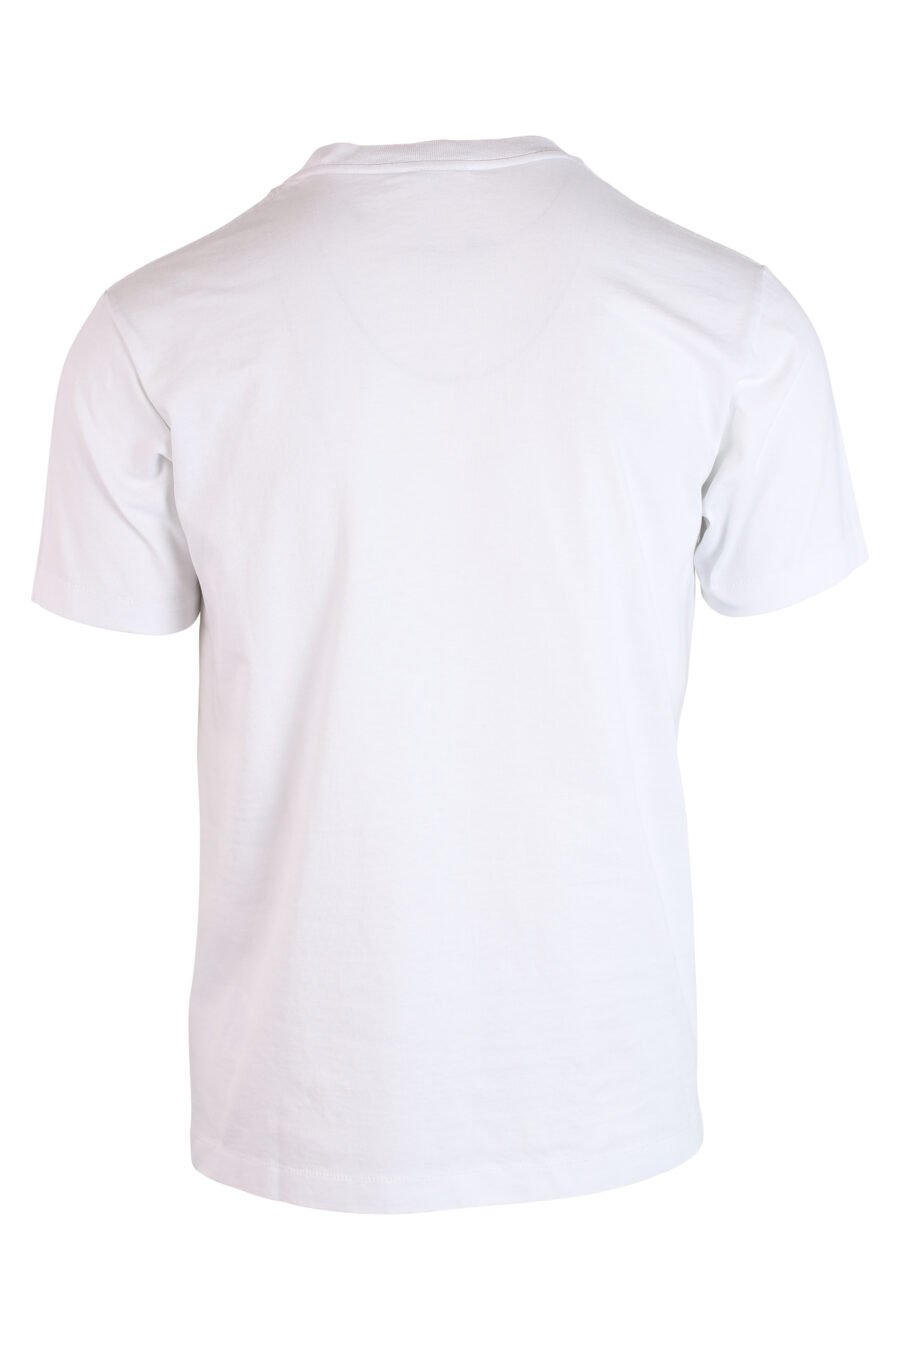 Weißes T-Shirt mit grünem Maxilogo "paris classic" - IMG 3261